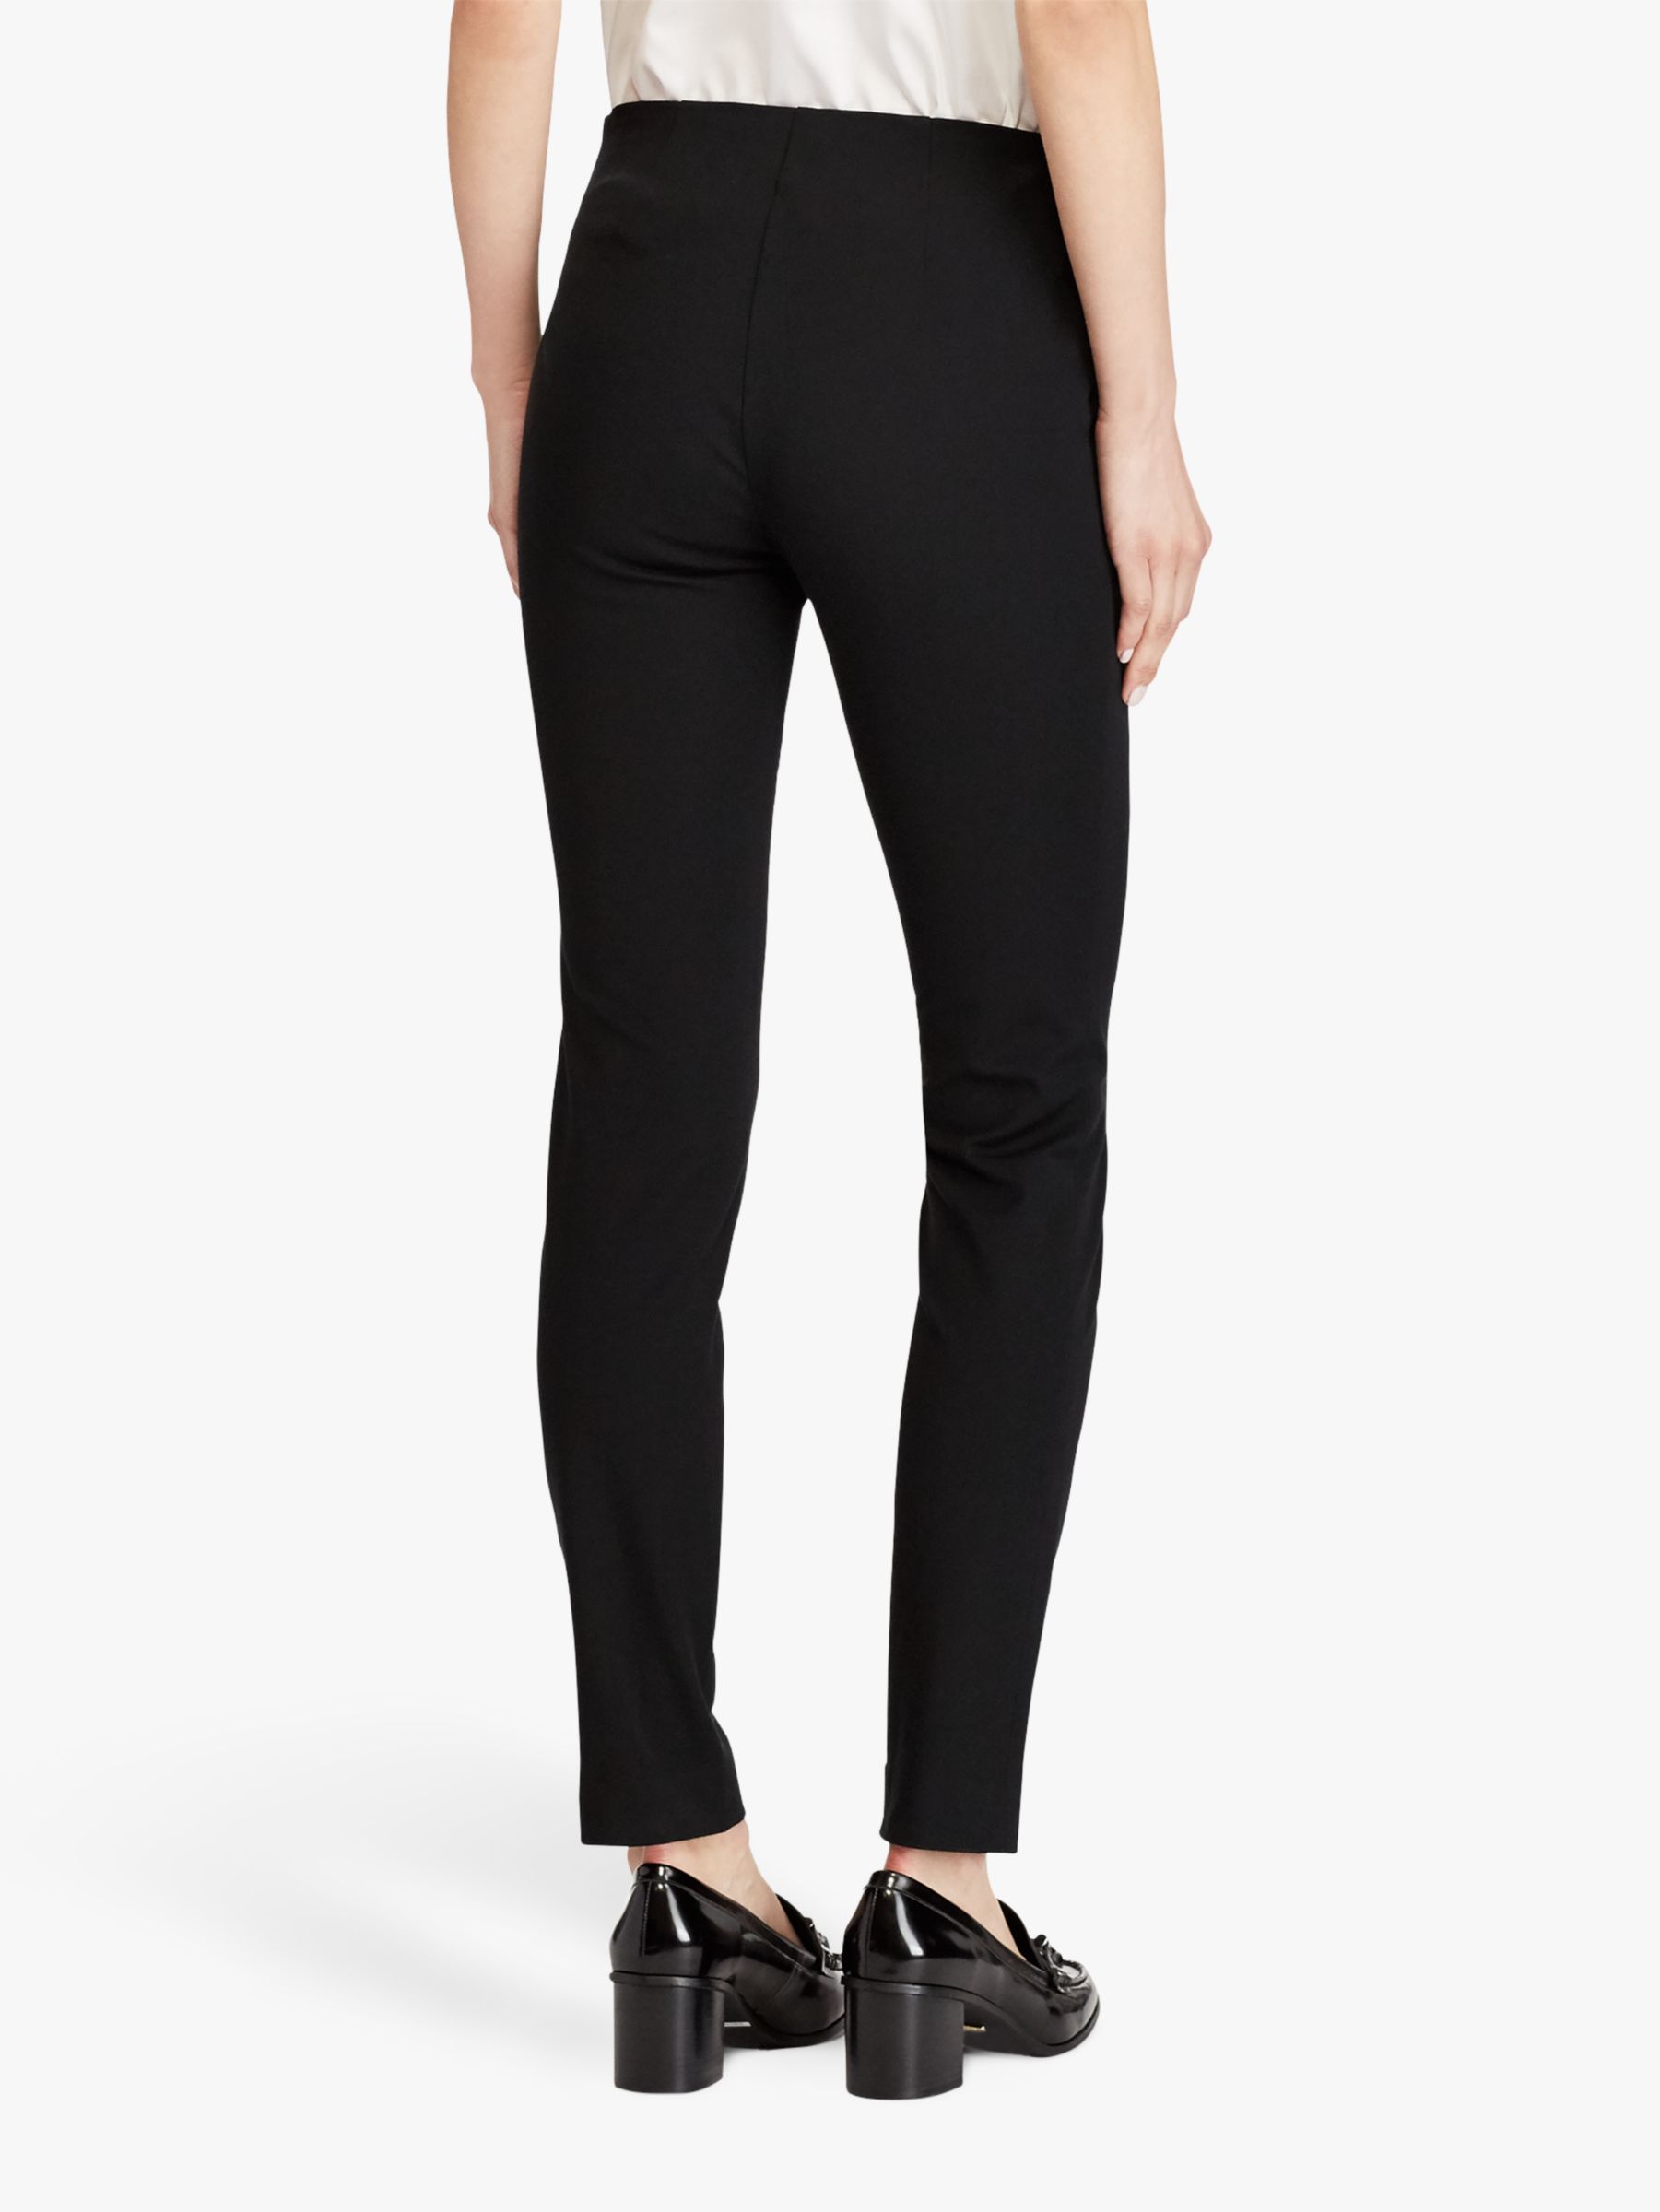 Lauren Ralph Lauren Twill Skinny Trousers, Black at John Lewis & Partners